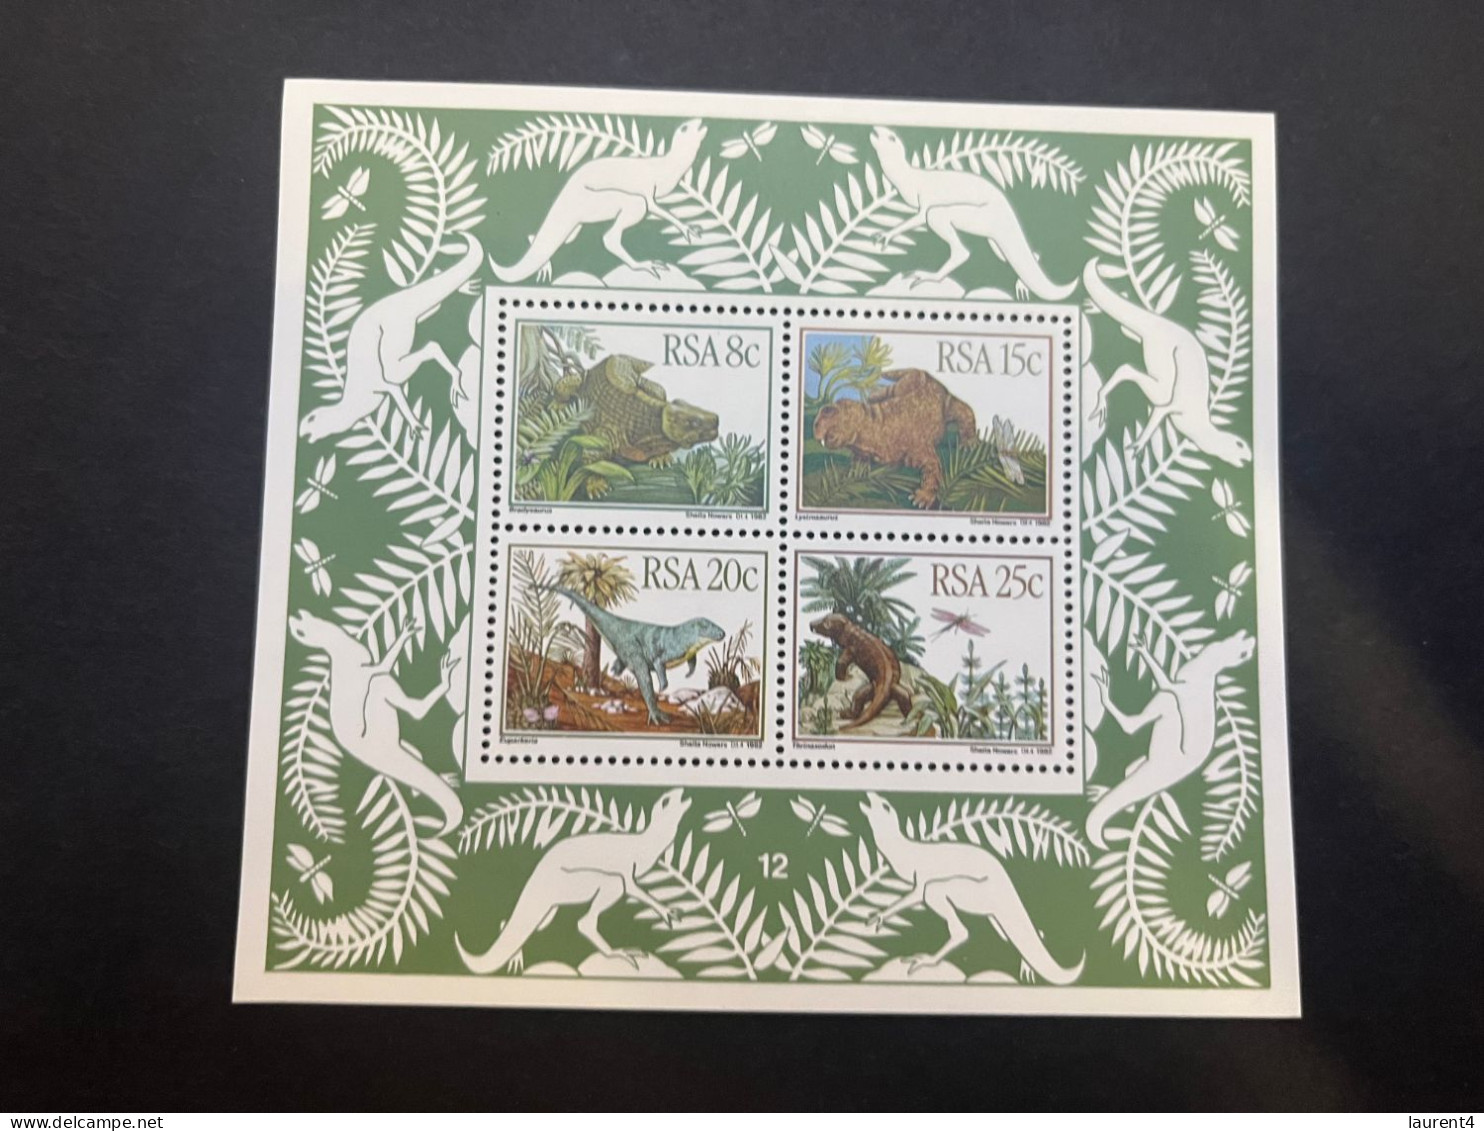 13-5-2024 (stamp) Mint (neuve) Mini-sheet - RSA South Africa - Dinosaurs - Prehistorics